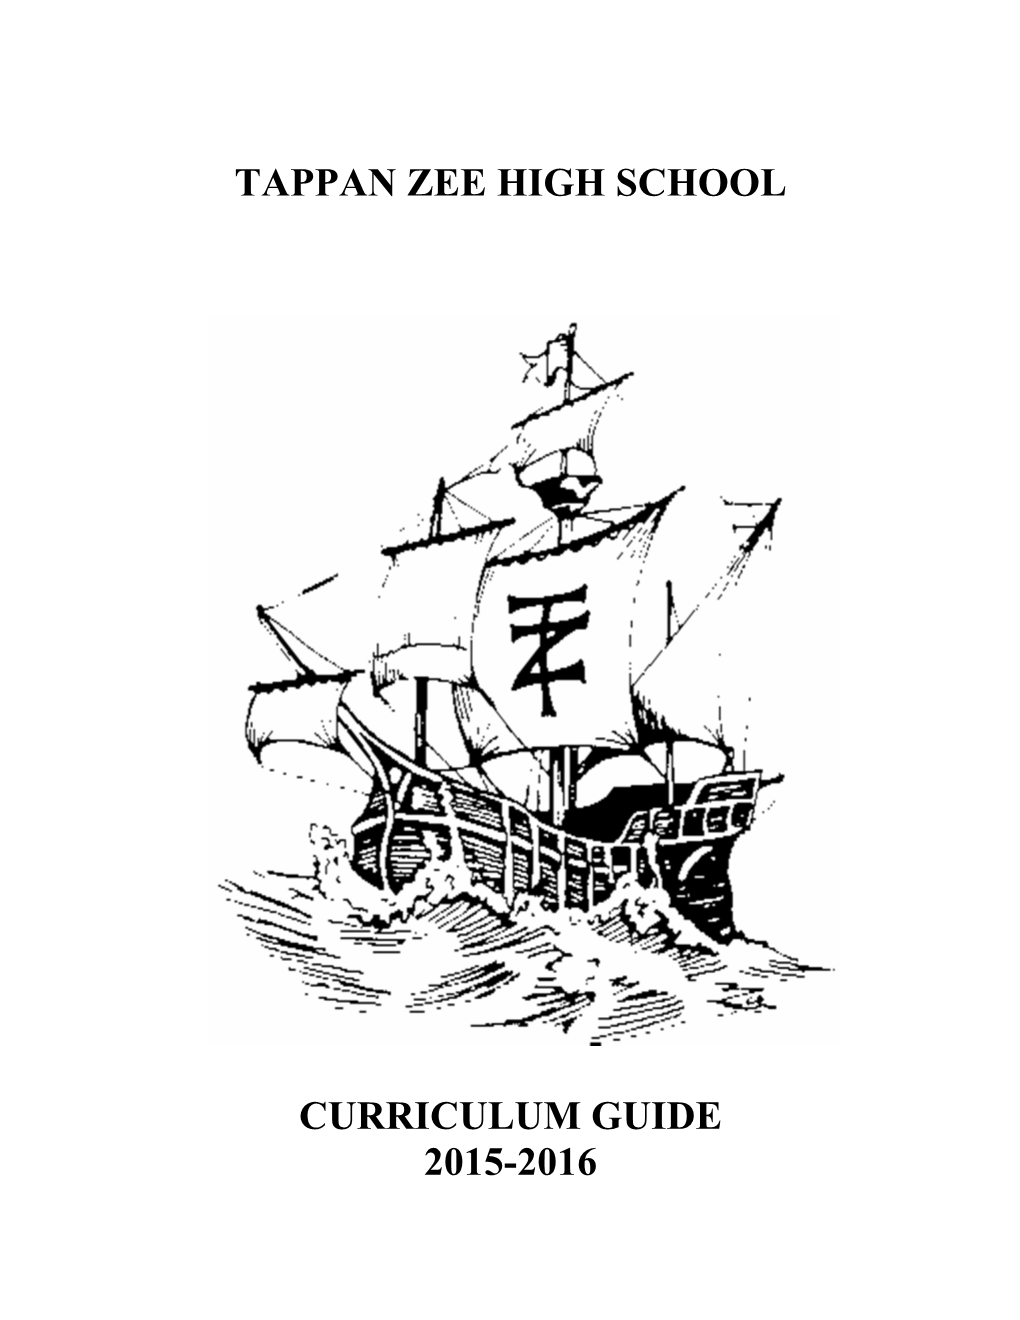 Tappan Zee High School Curriculum Guide 2015-2016